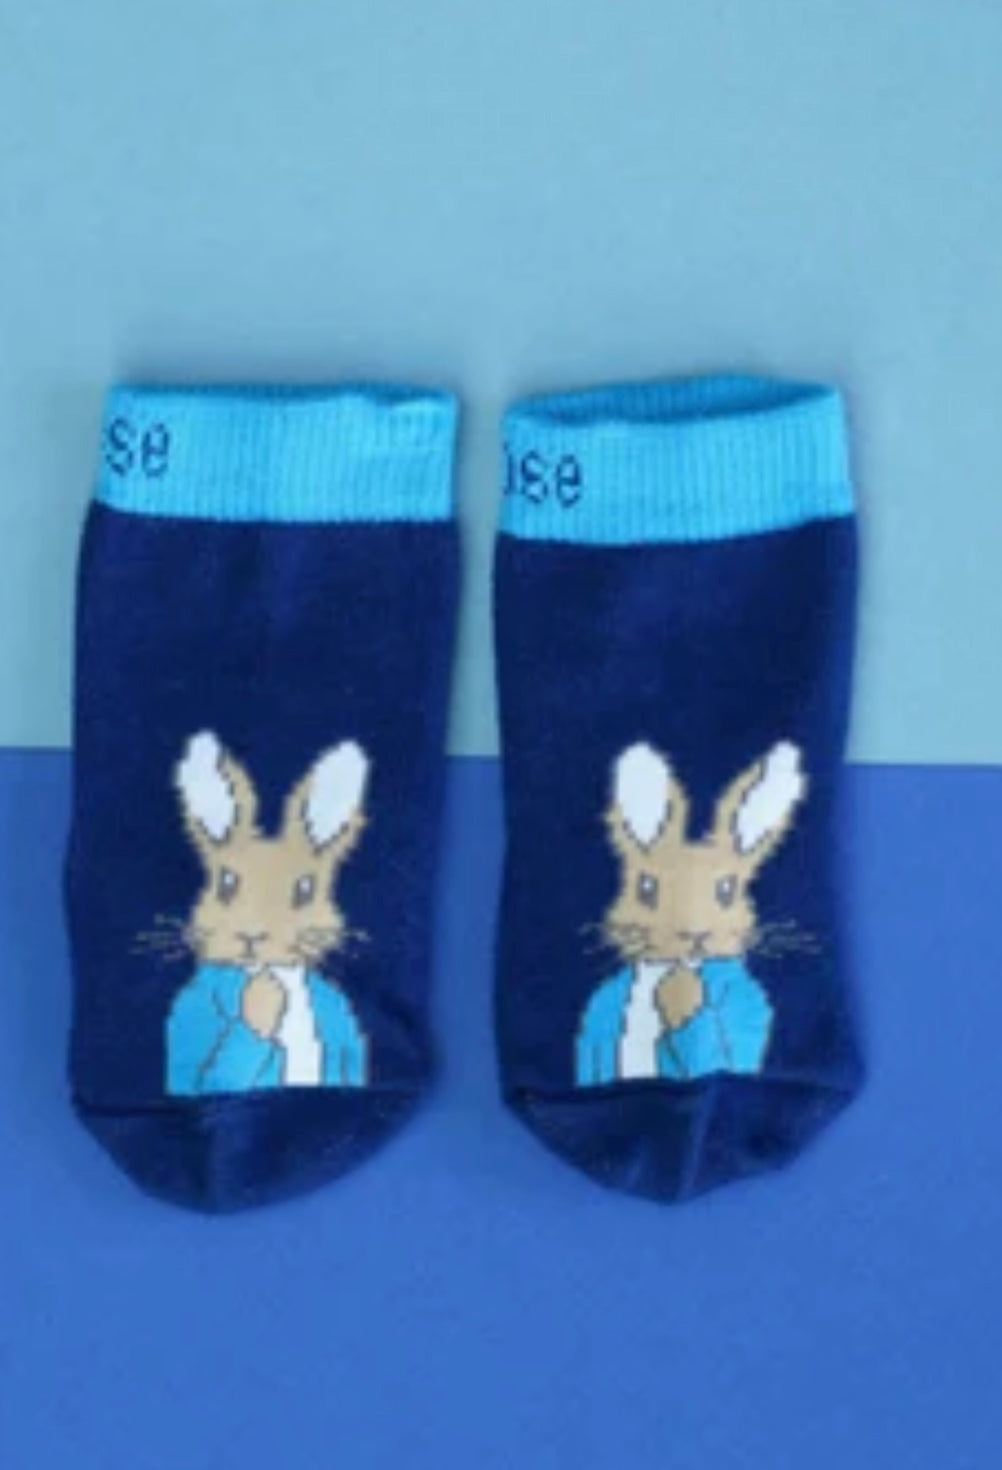 Peter Rabbit Navy Socks